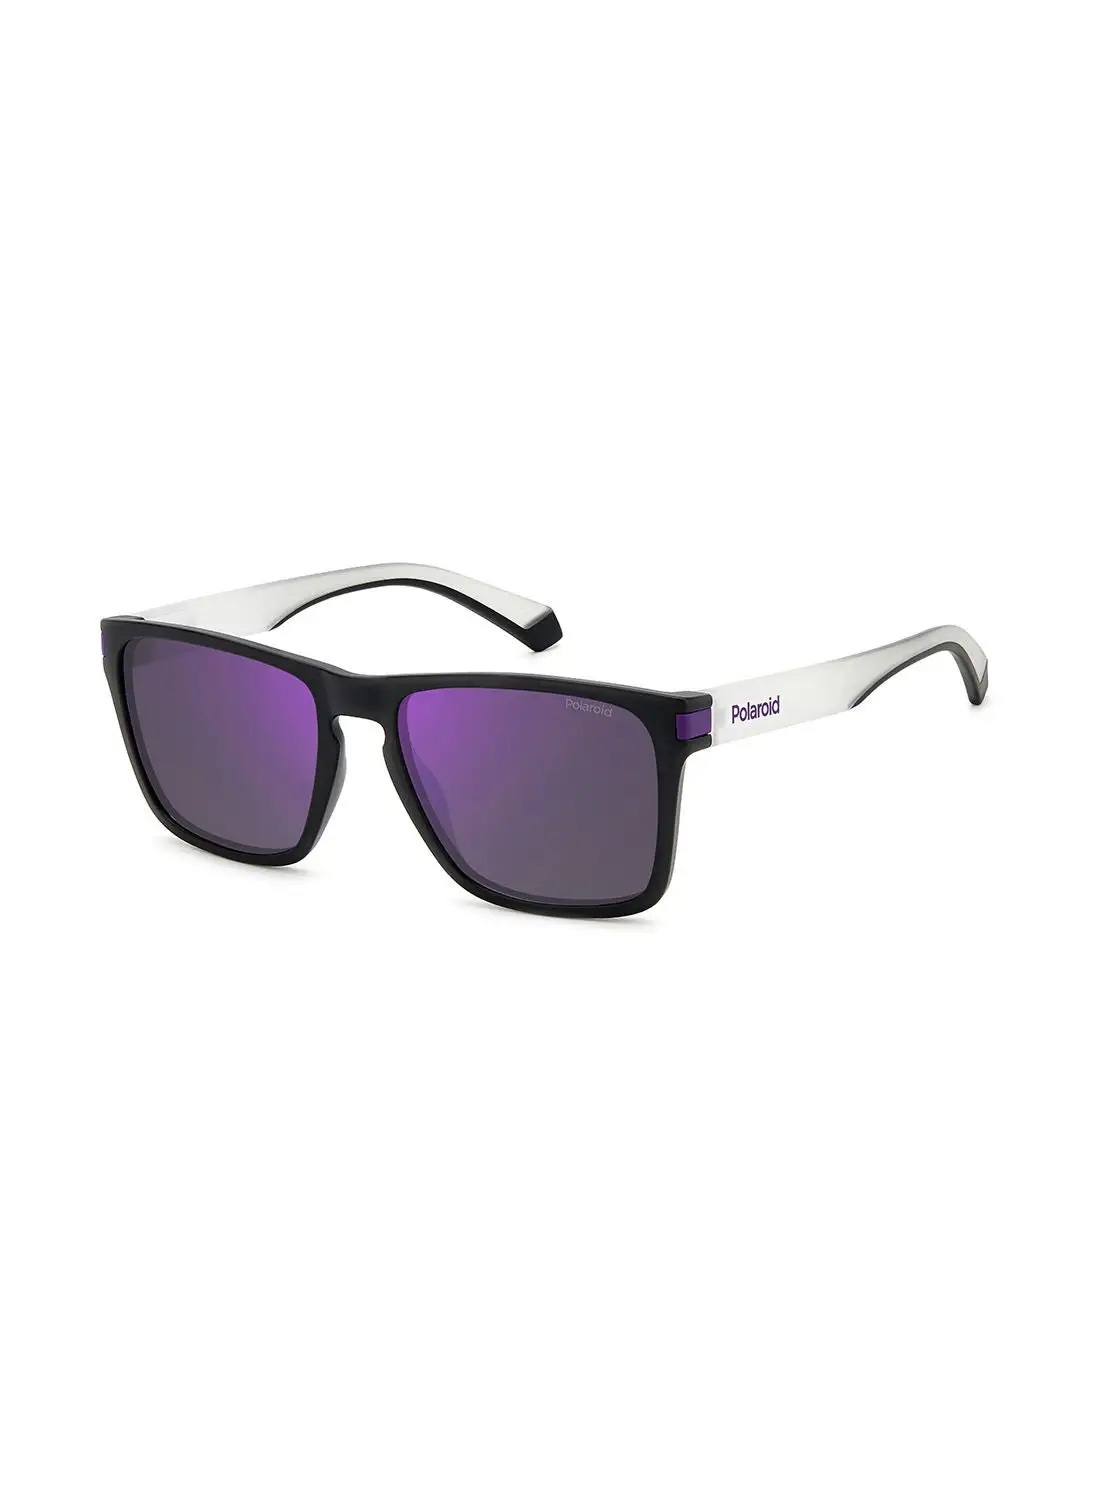 Polaroid Unisex UV Protection Rectangular Sunglasses - Pld 2139/S Matblkvio 56 - Lens Size: 56 Mm